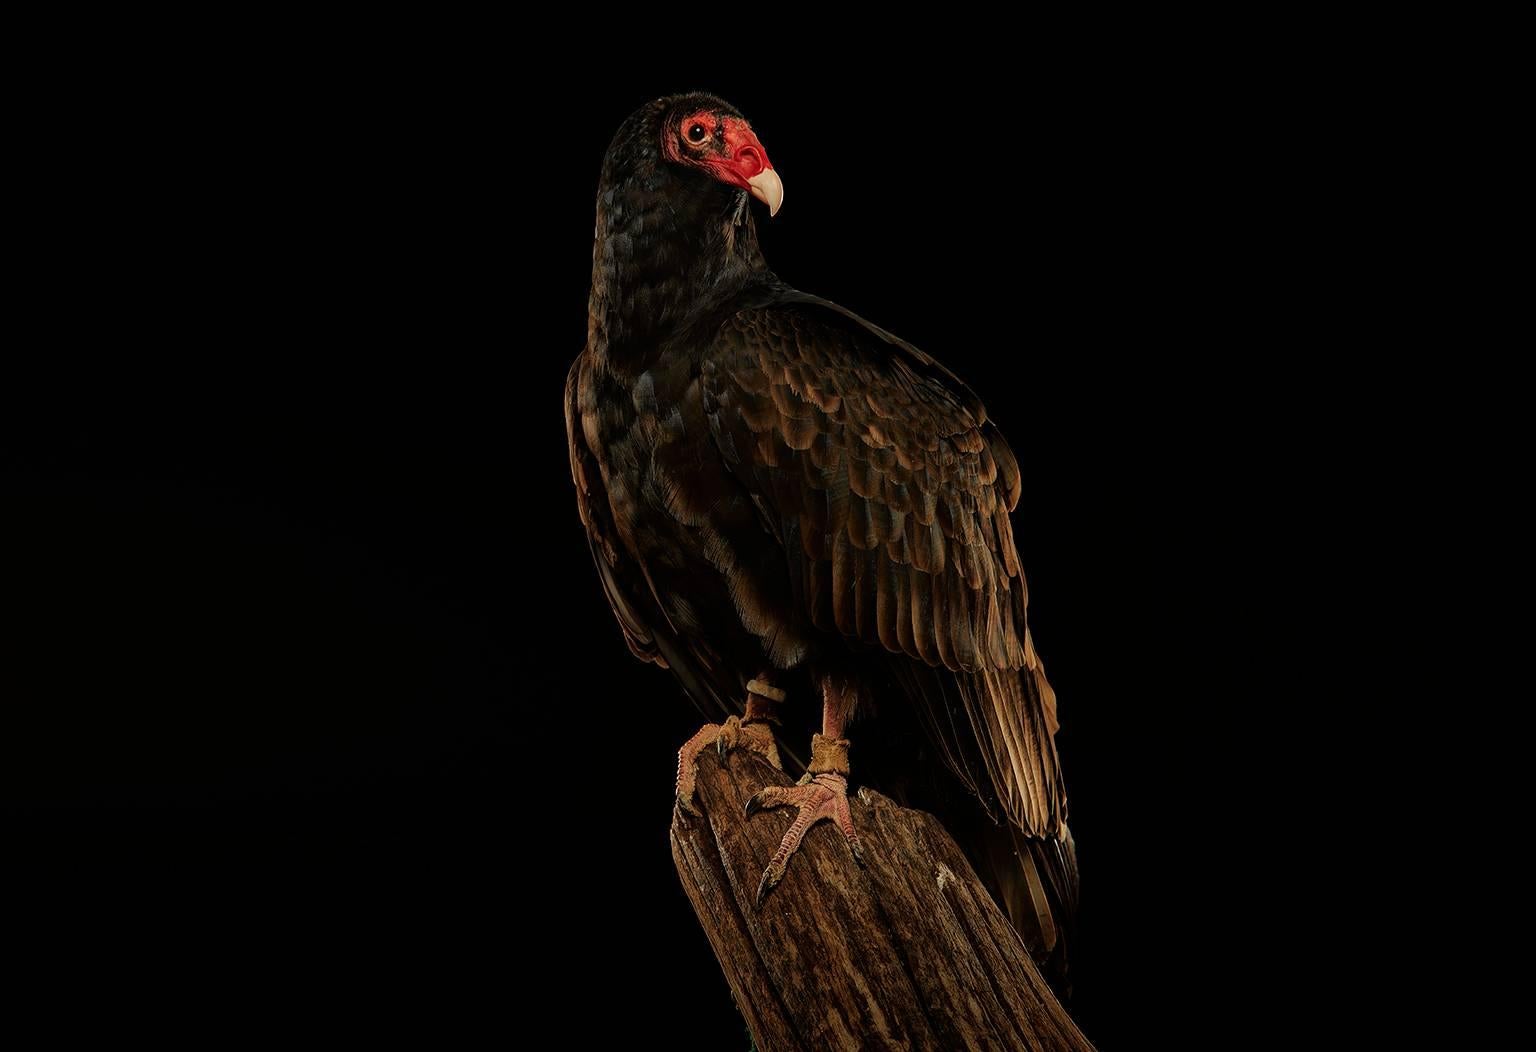 Chris Gordaneer Portrait Photograph - Birds of Prey Turkey Vulture No.8